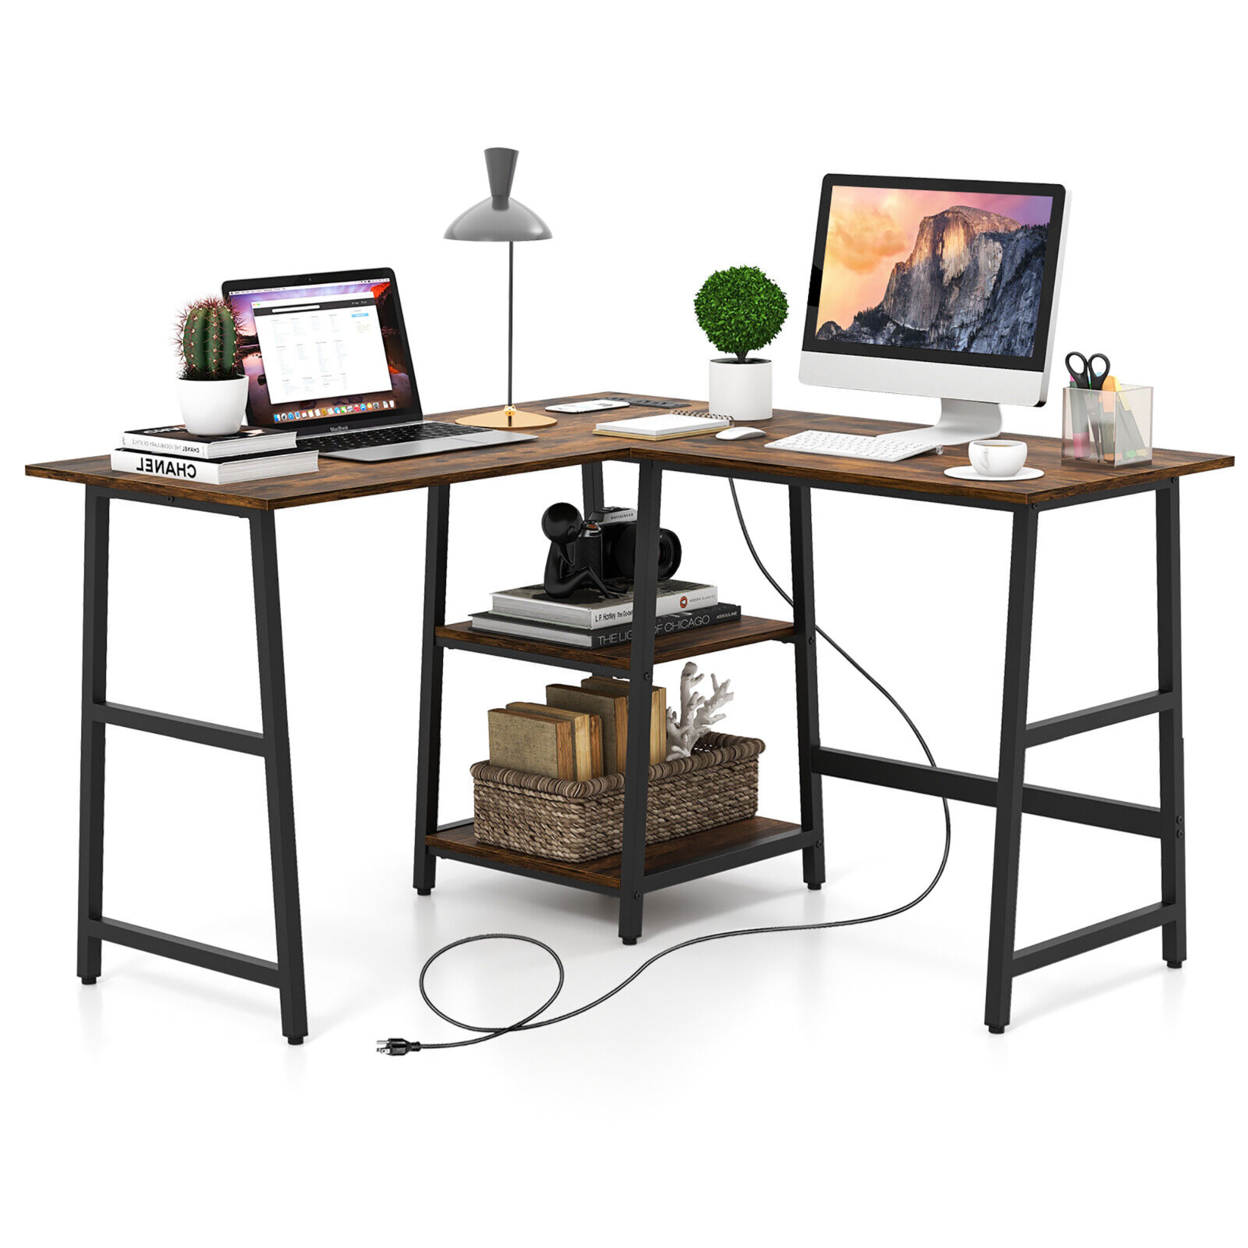 L Shaped Corner Computer Desk Study Table W/Storage Shelves - Rustic Brown